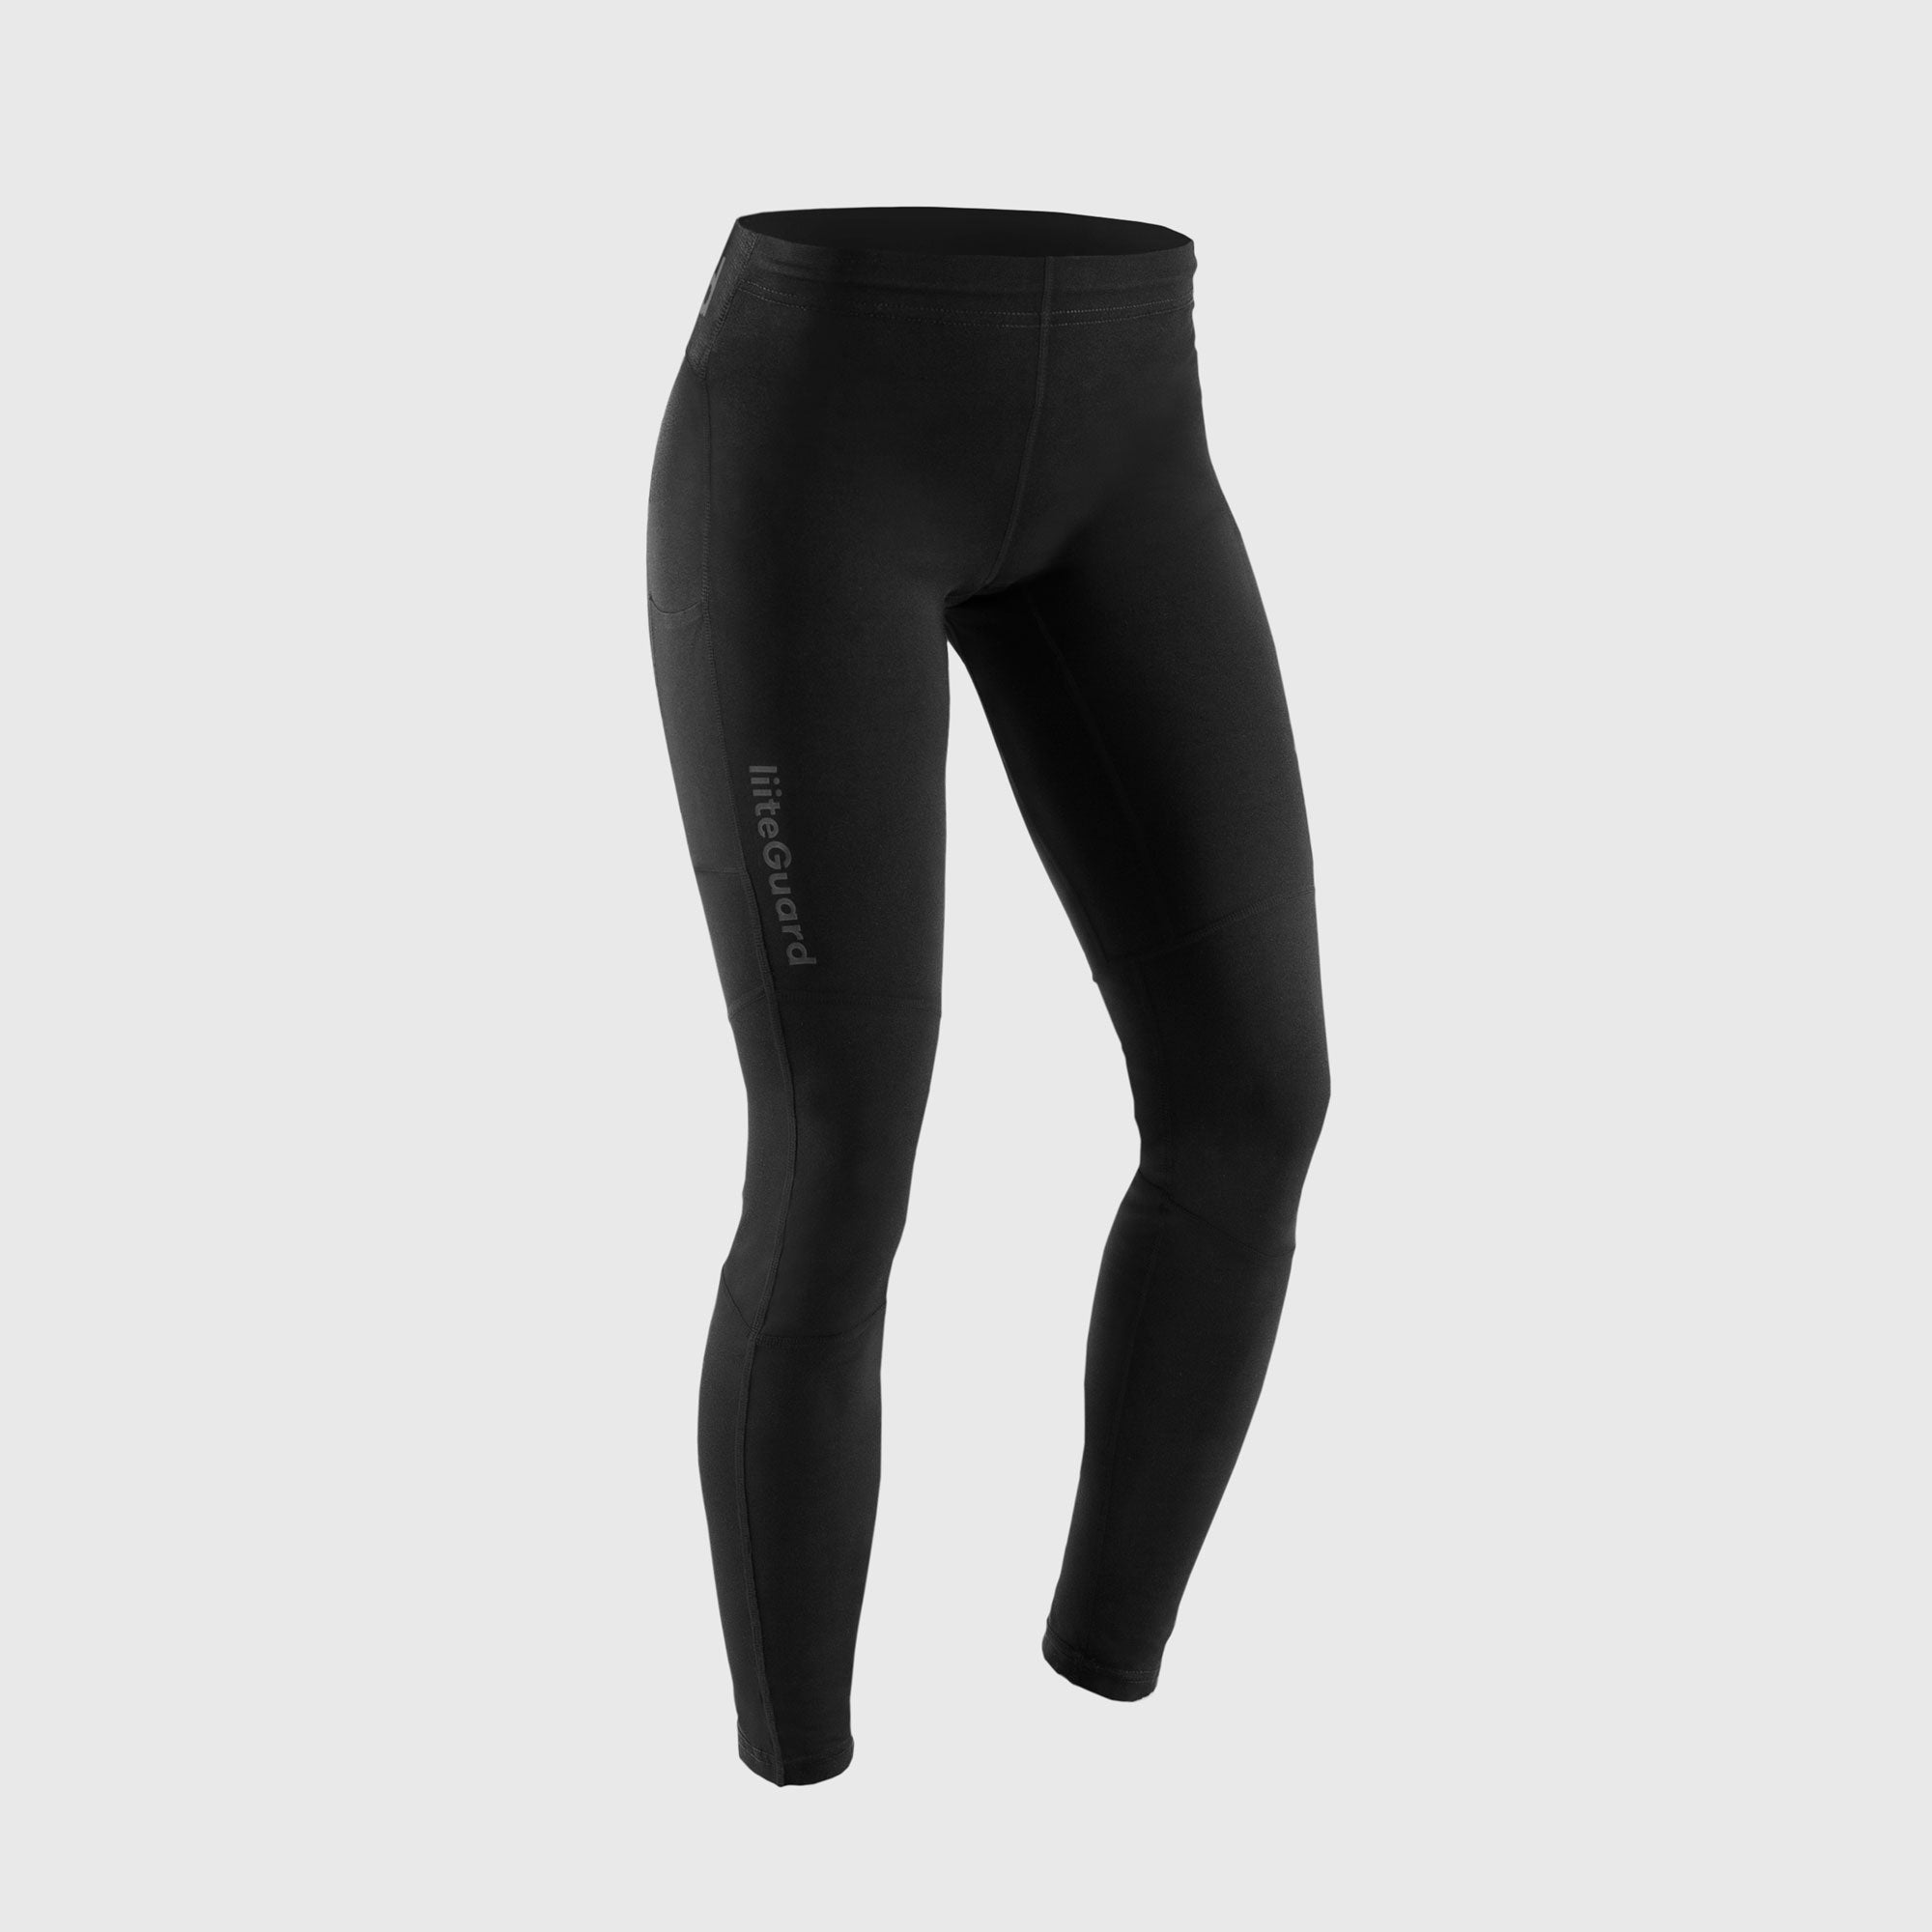 liiteGuard GLU-TECH HOT LONG TIGHTS (WOMEN) Long tights BLACK